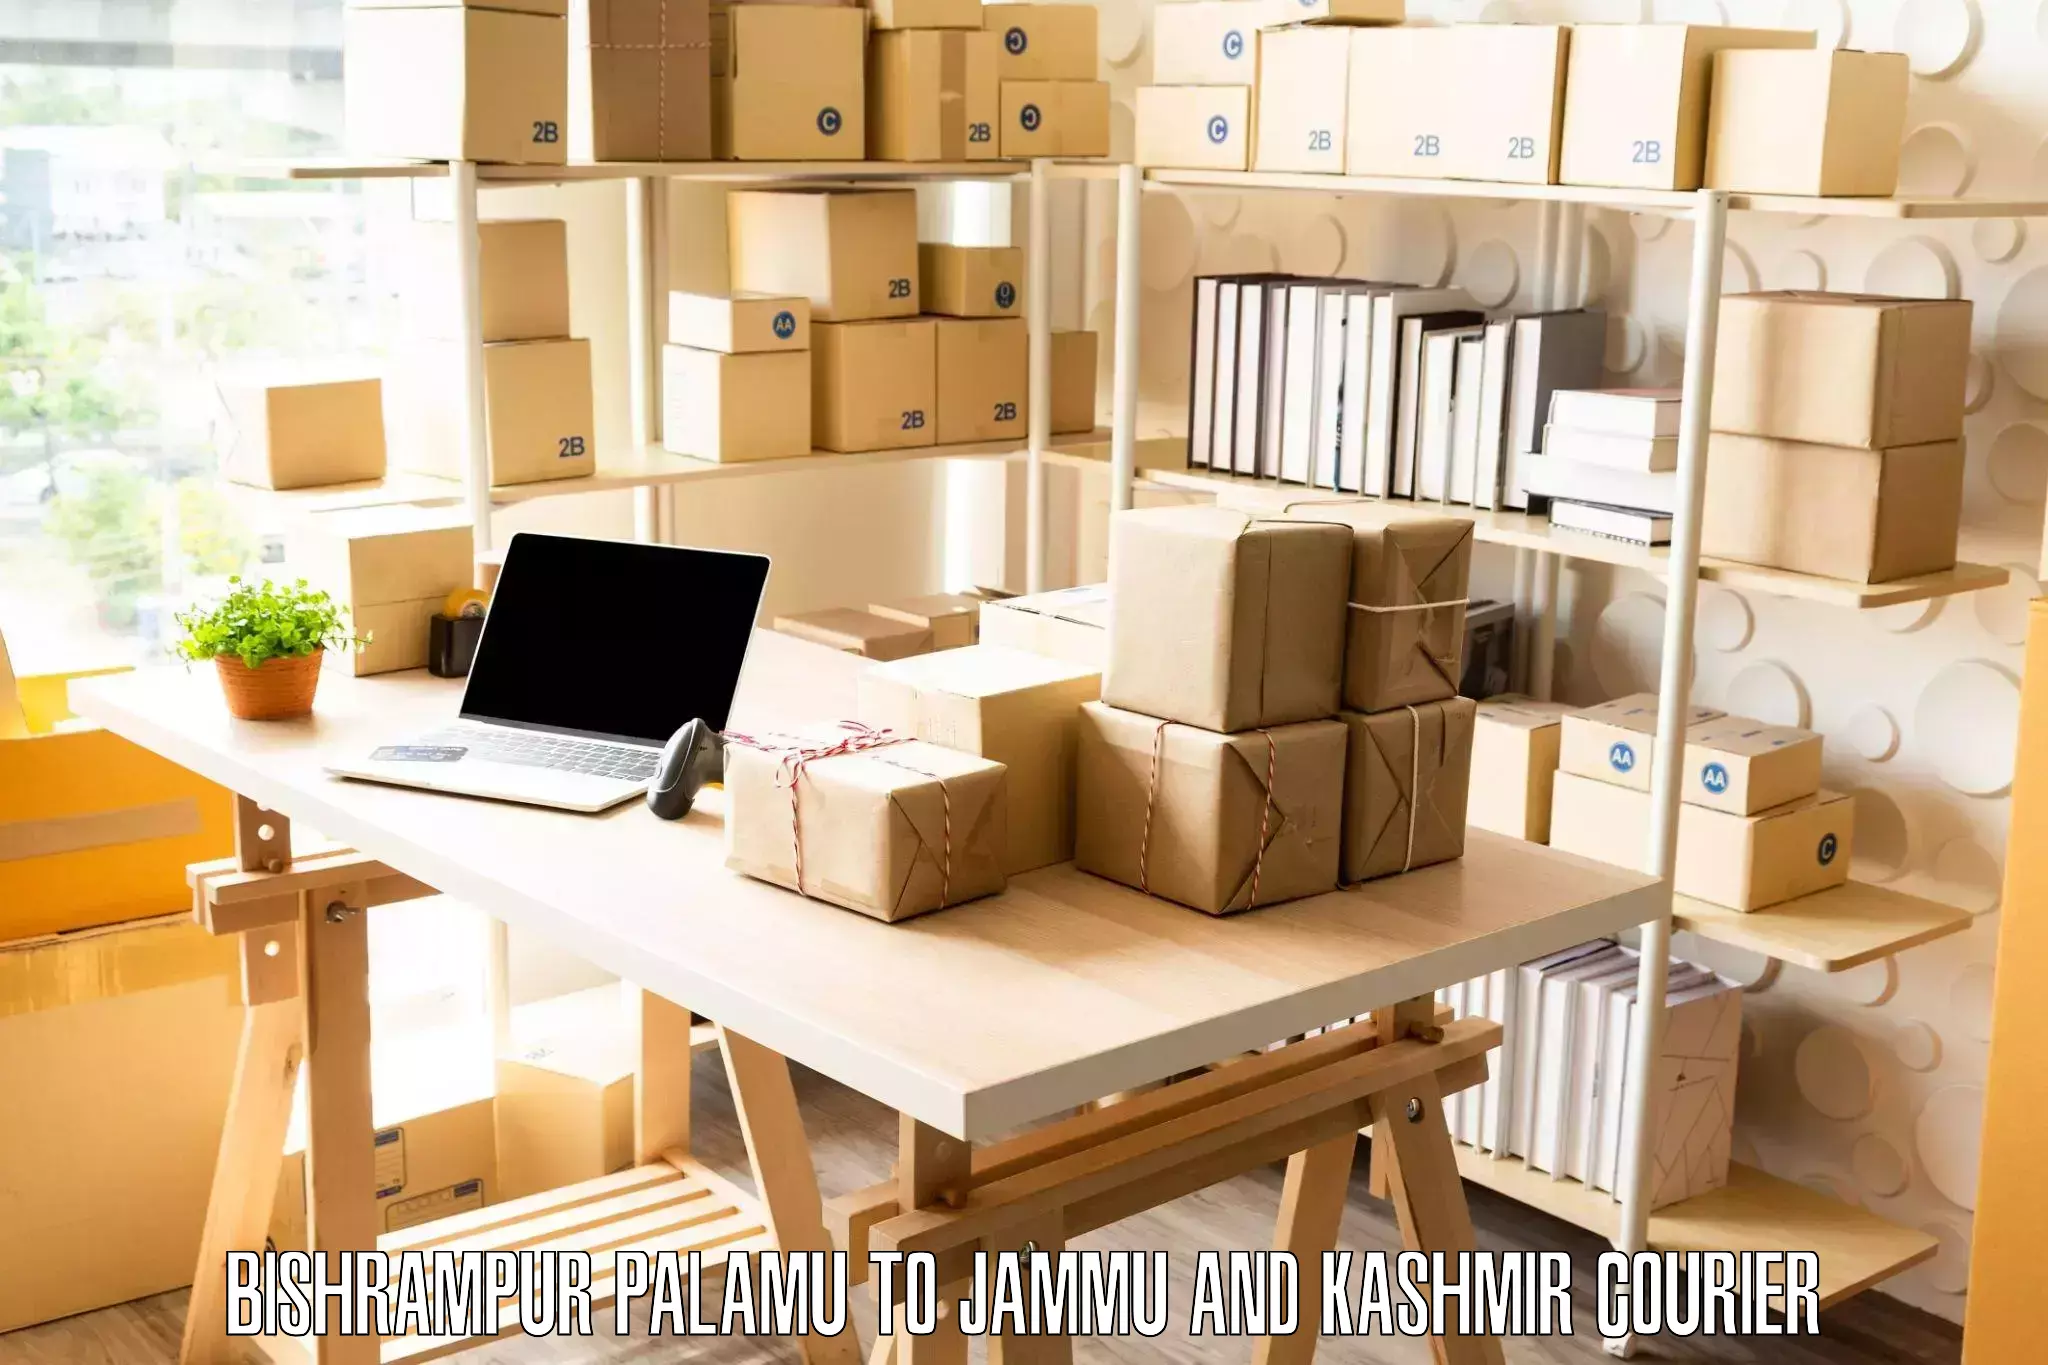 Professional moving company Bishrampur Palamu to Nagrota